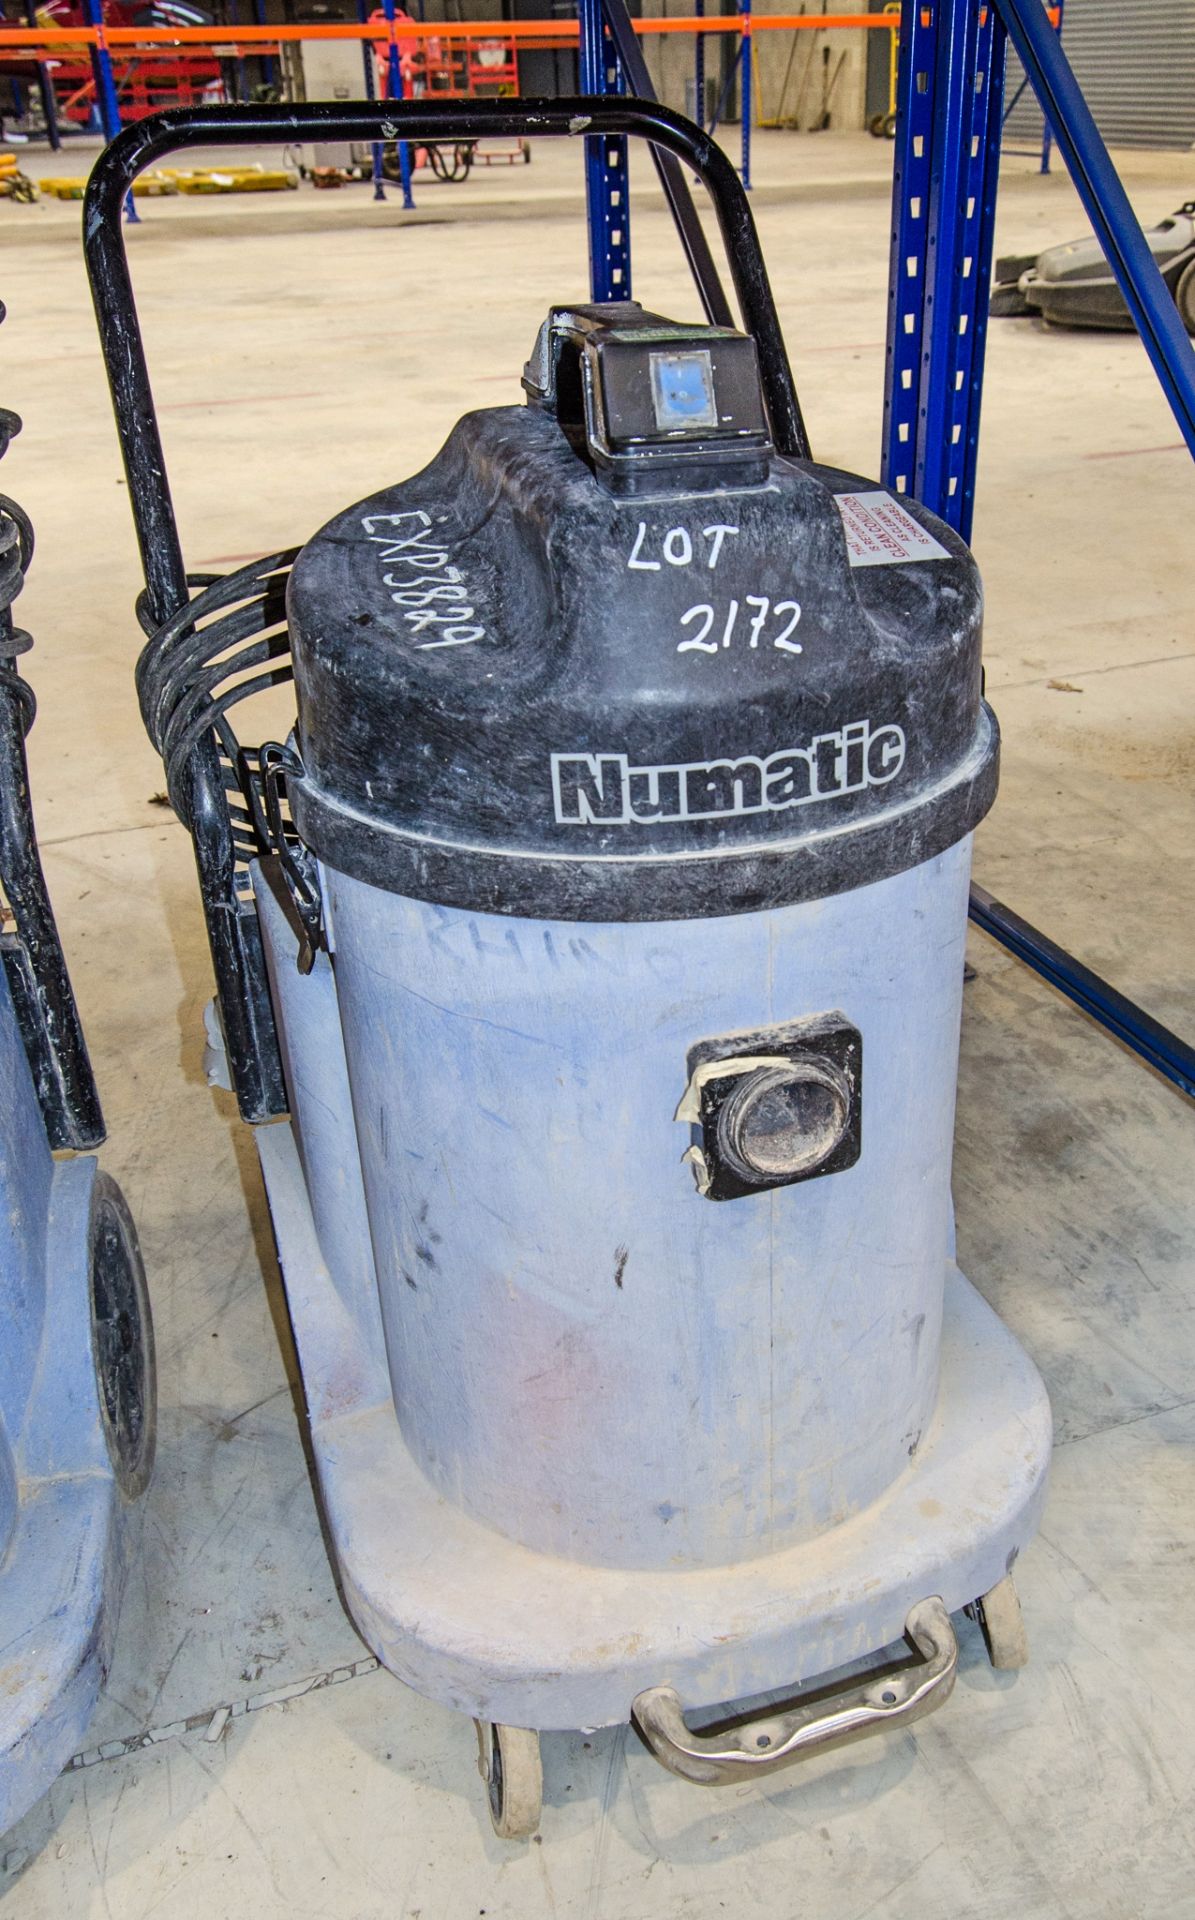 Numatic 110v vacuum cleaner EXP3829